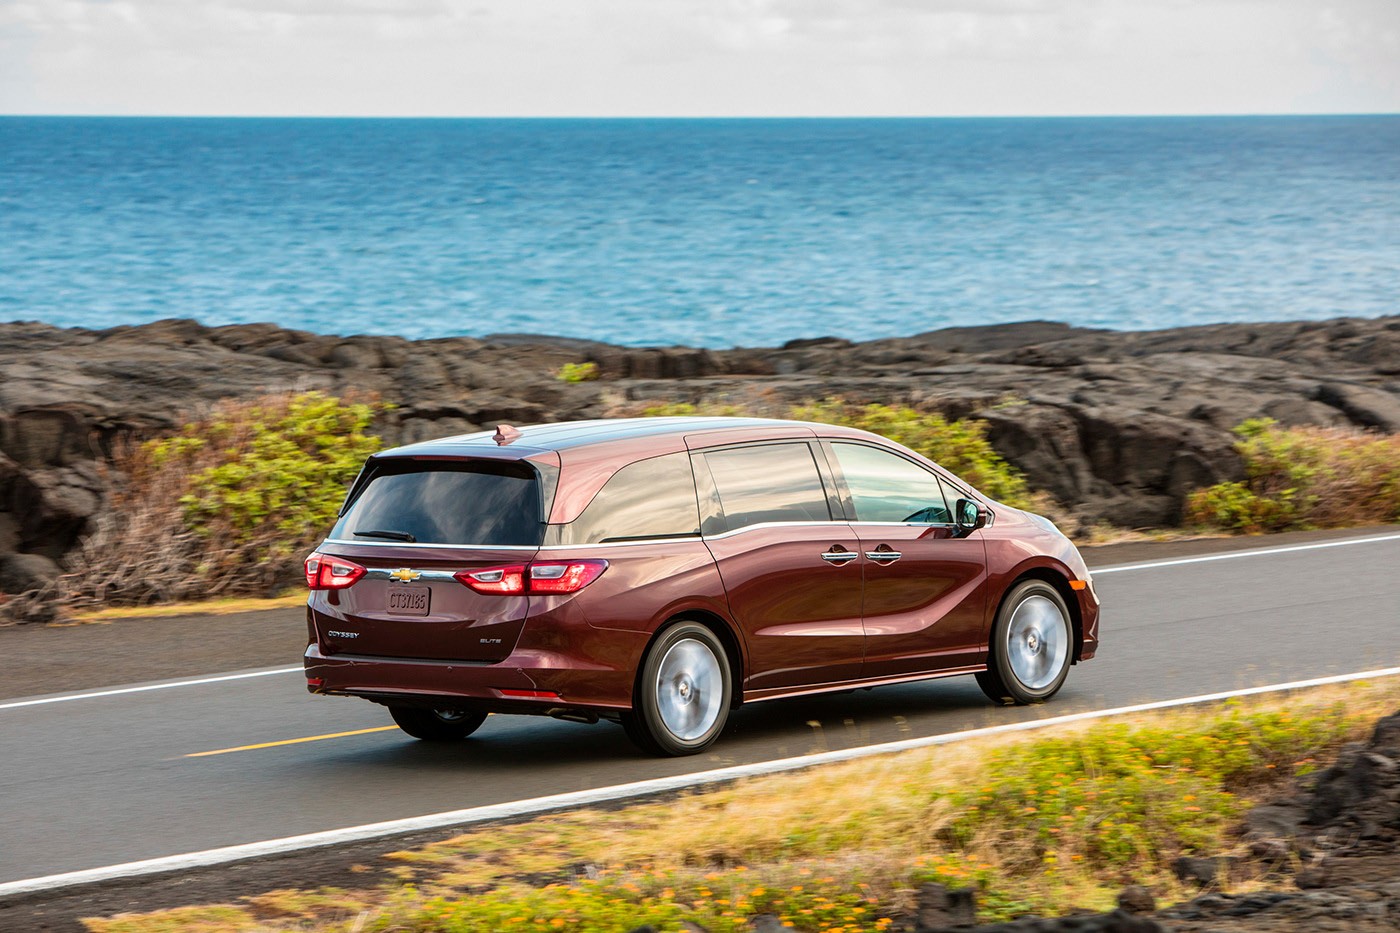 New Chevrolet Minivan Imagined With Honda Odyssey Underpinnings